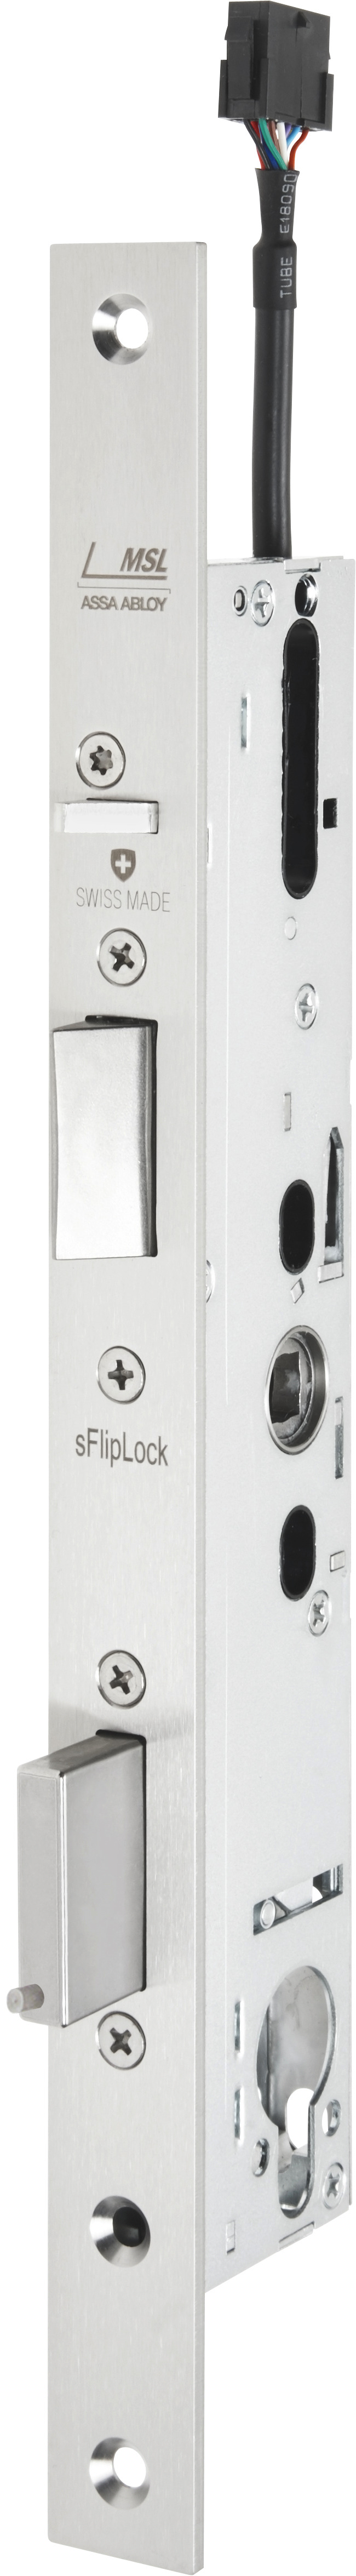 sFlipLock check panic security mortise lock 14474PE-ZF